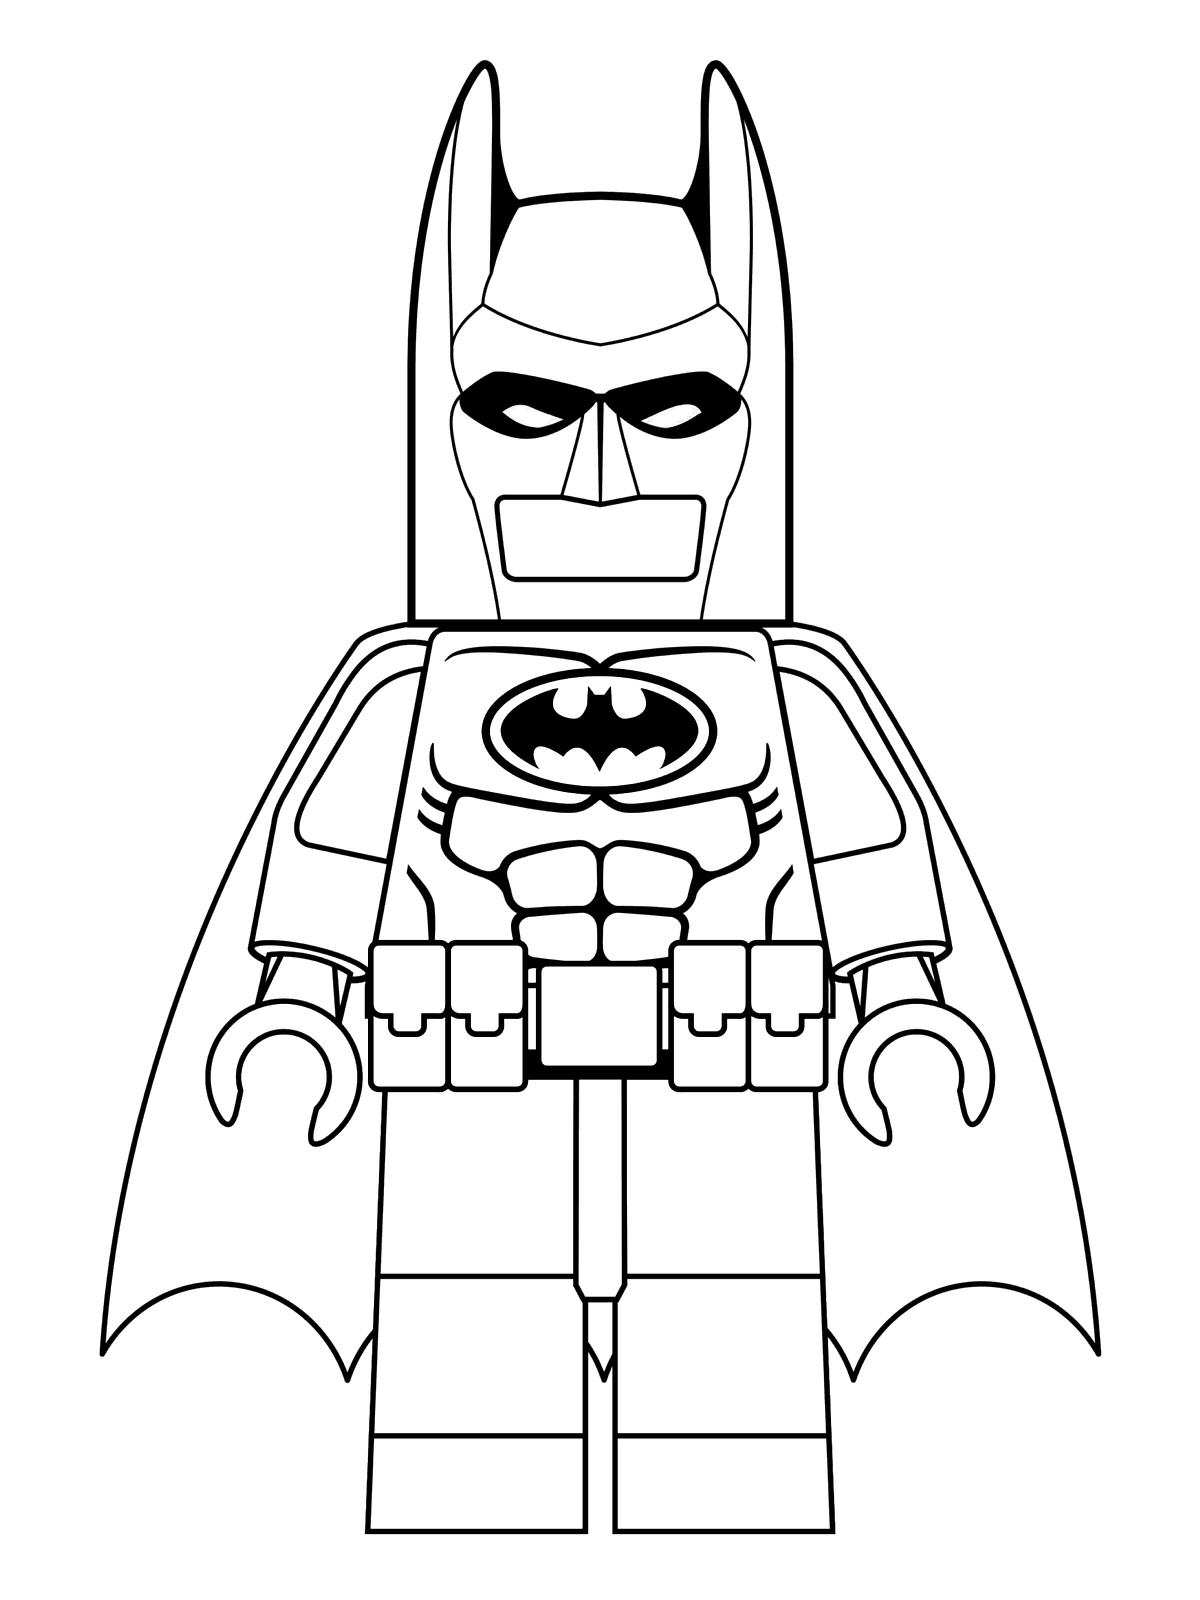 Simples coloriage Lego Batman